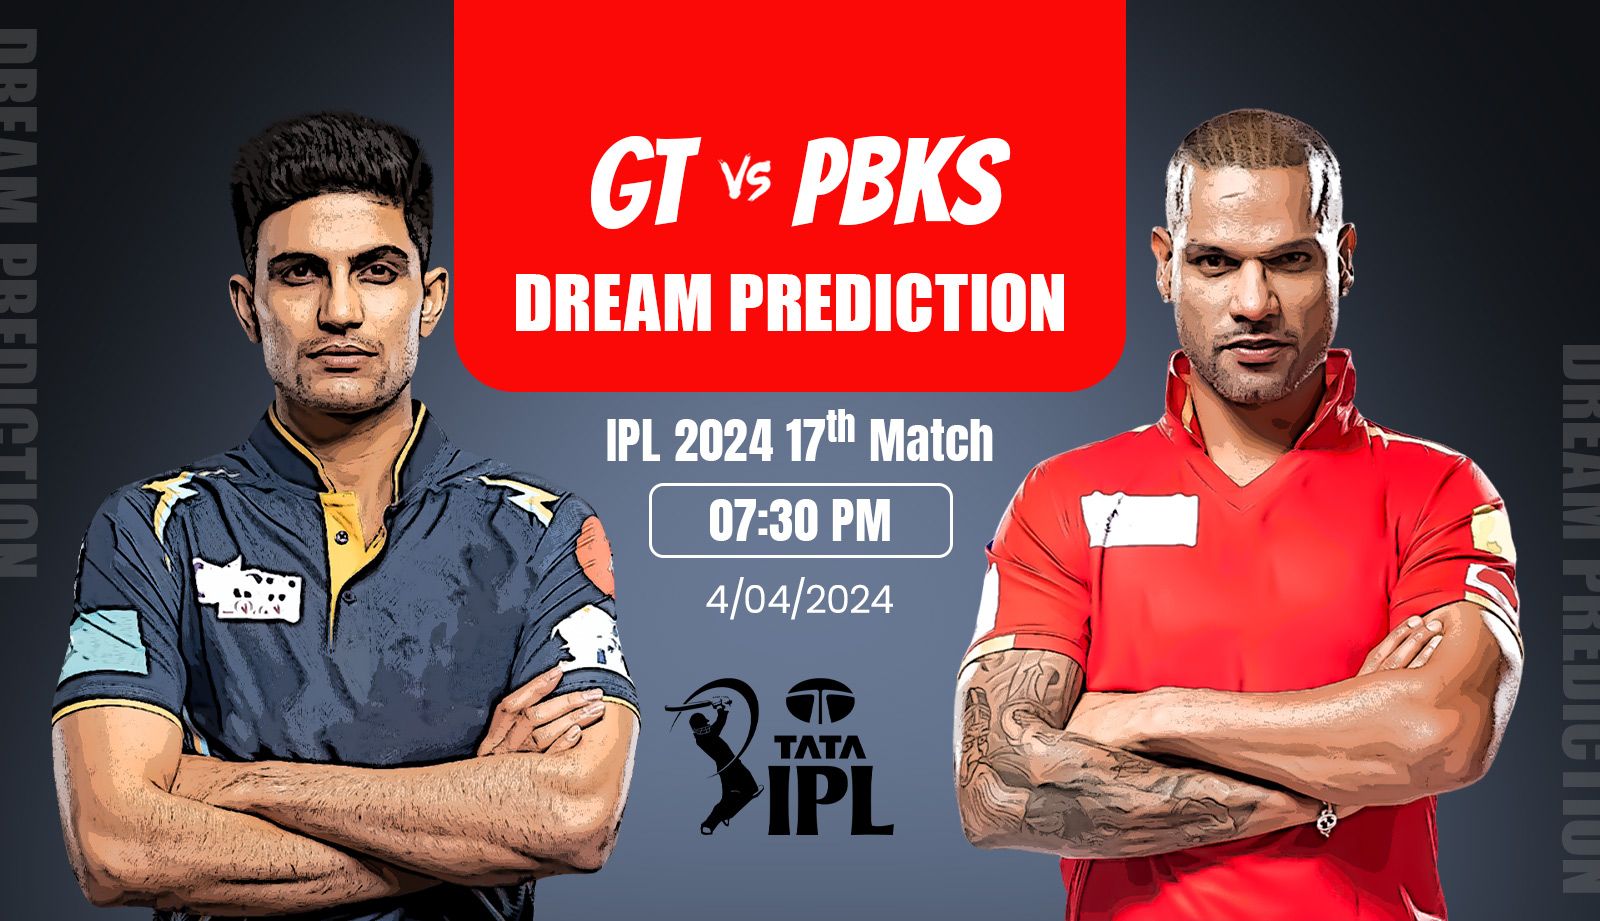 GT vs PBKS Dream11 Prediction: గుజరాత్ vs పంజాబ్… భీకరు పోరులో గెలిచేదెవరు ?